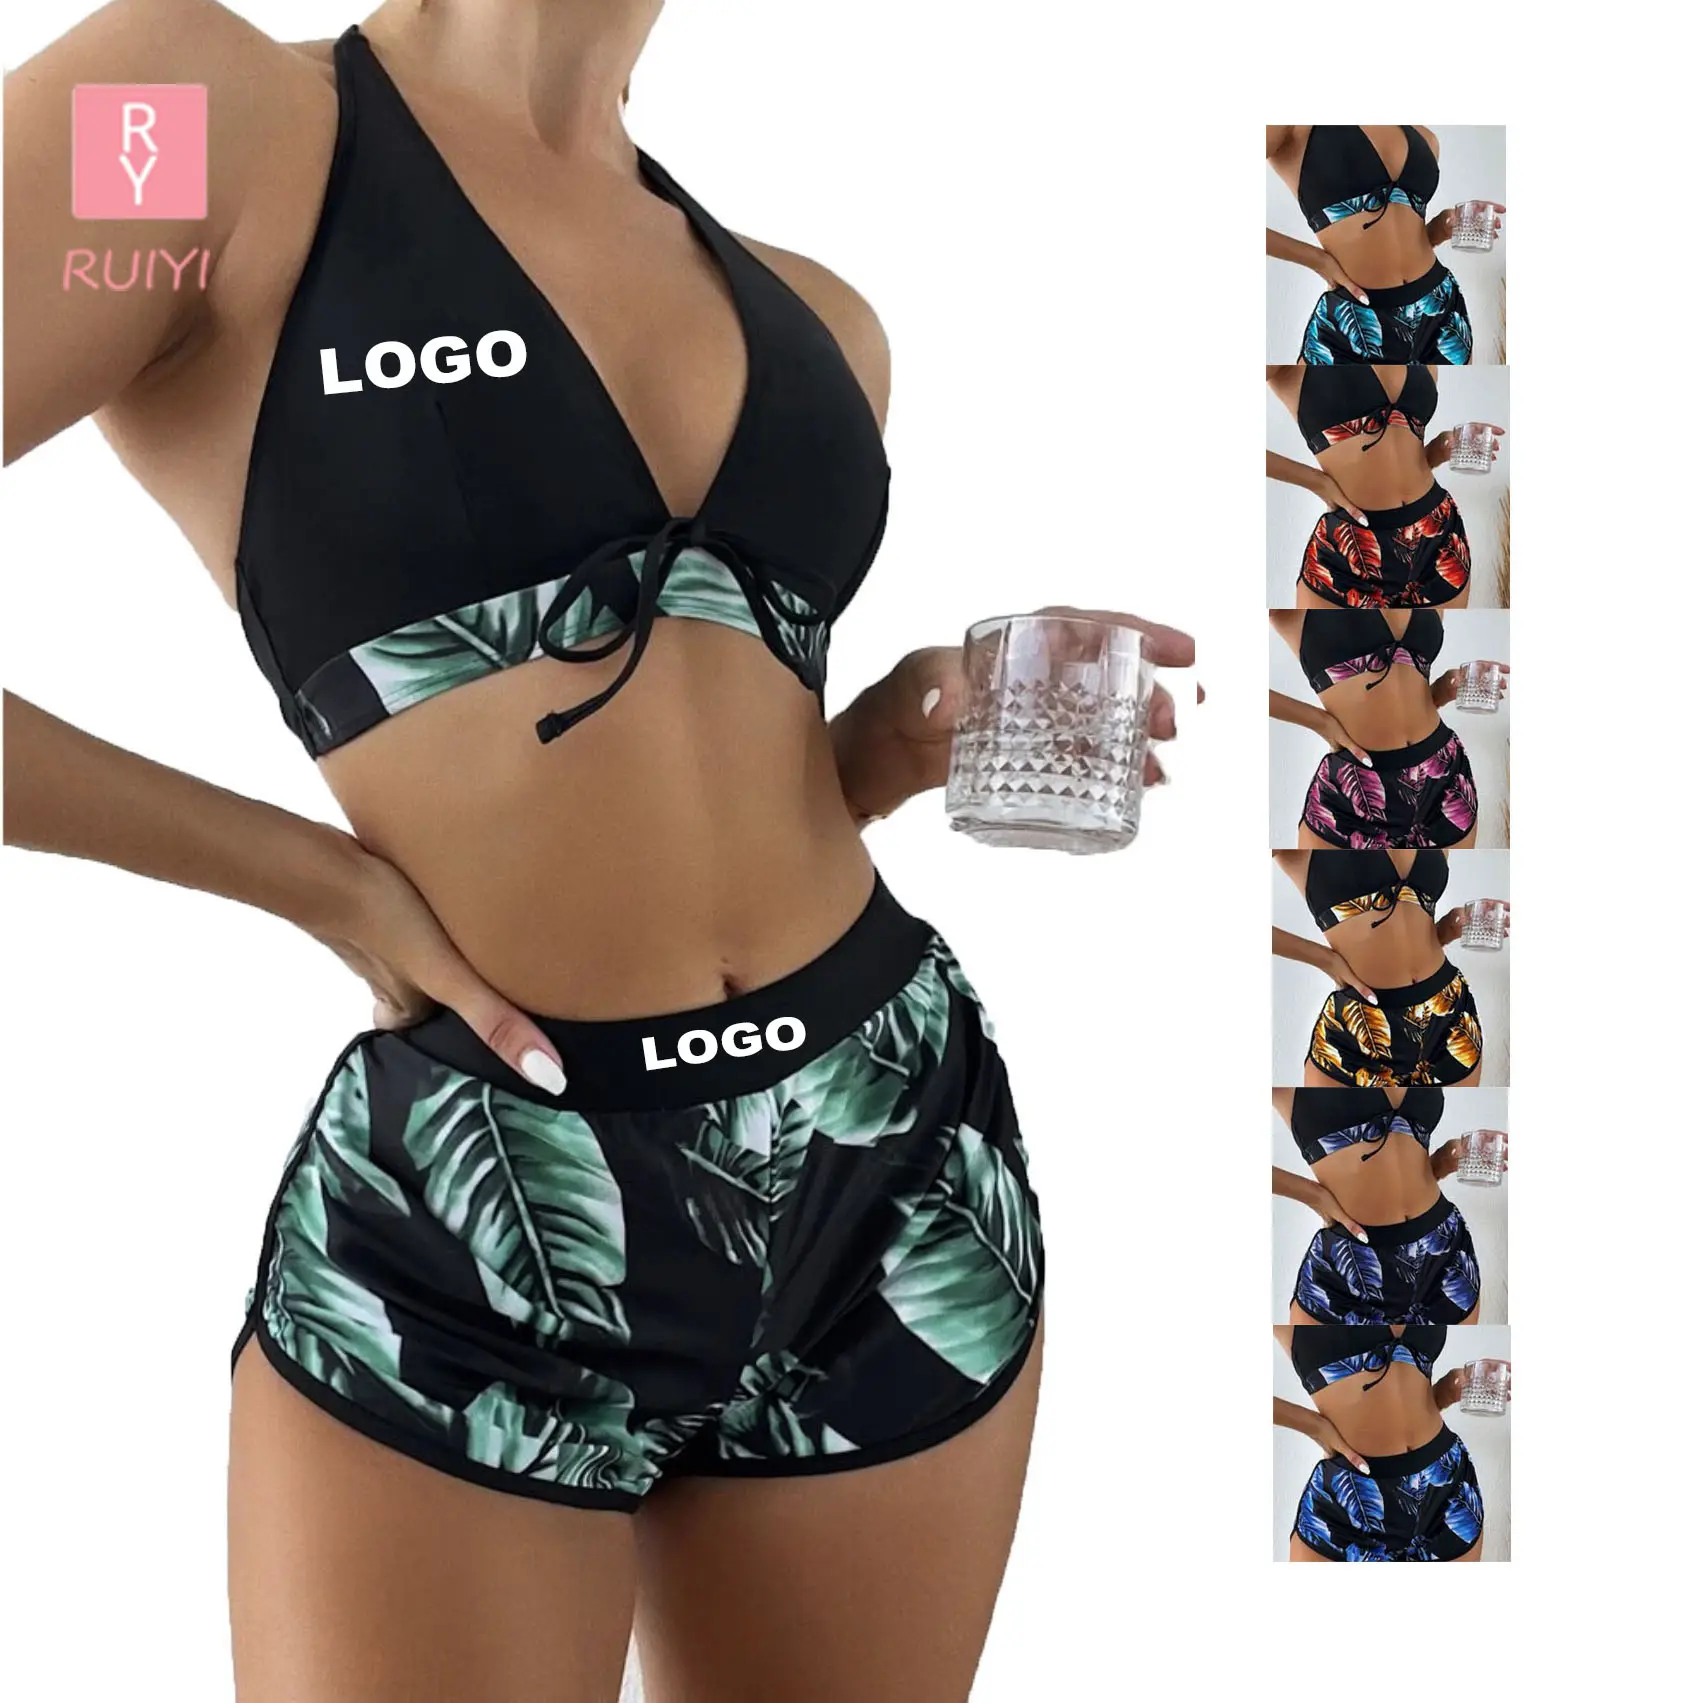 RUIYI New Lotus Leaf Printed Kurzer Badehose Split Bademode Bikini Fitness Bademode Kunden spezifischer Badeanzug